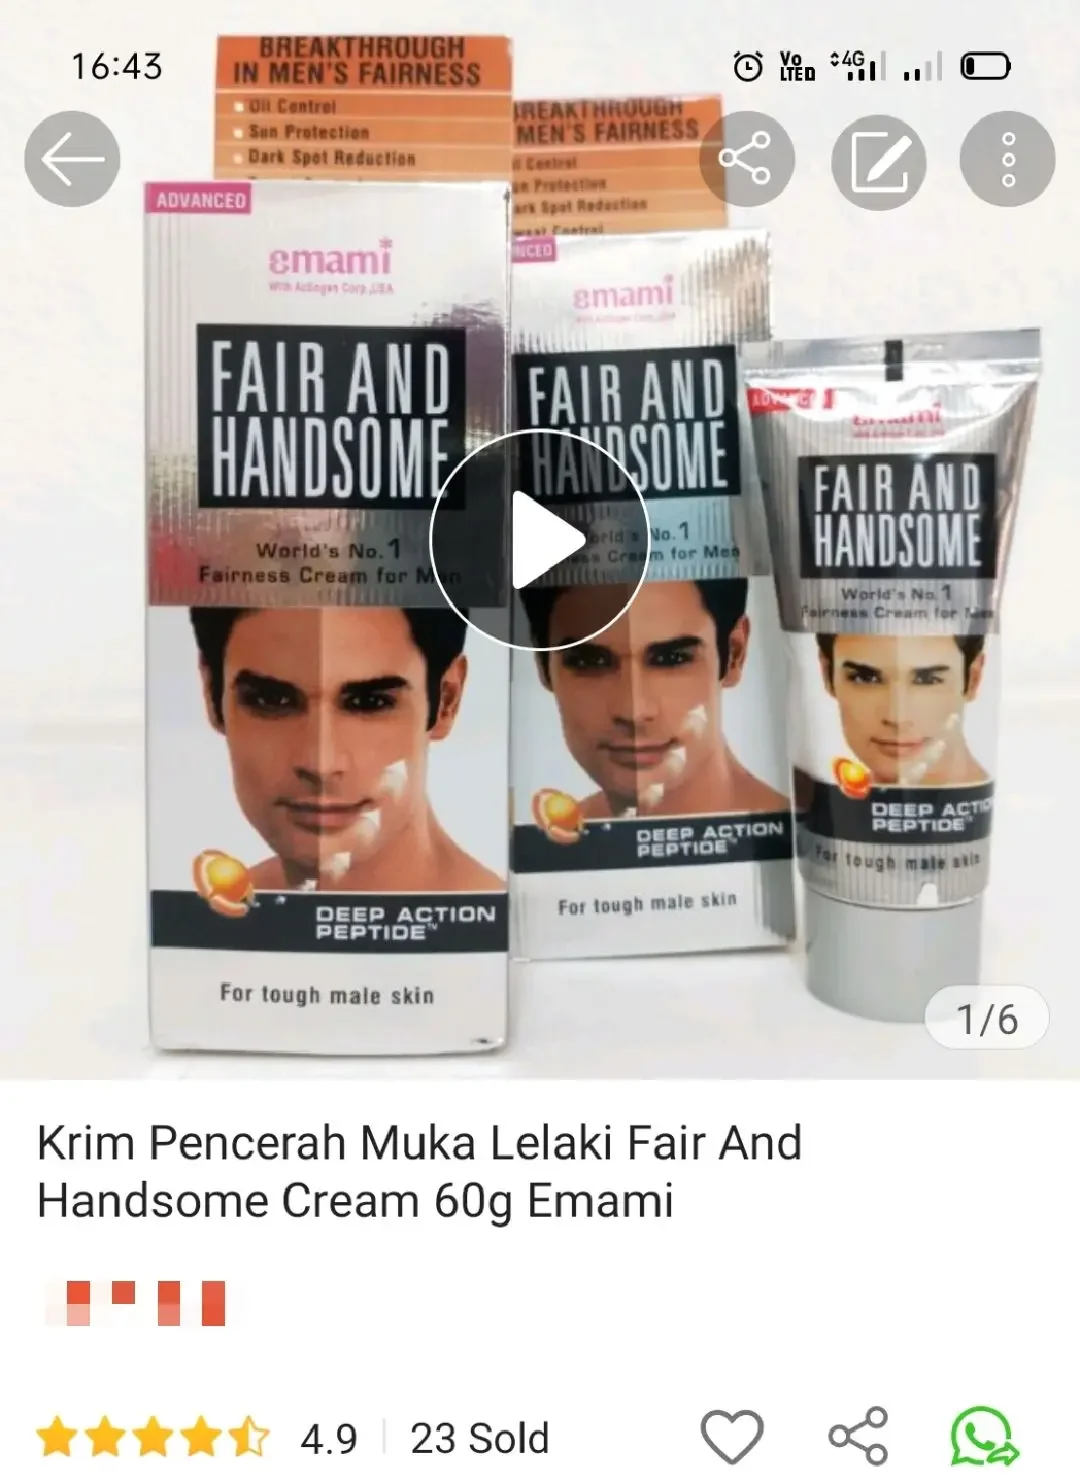 Krim Pencerah Kulit Muka Lelaki Fair And Handsome Cream 60g Emami